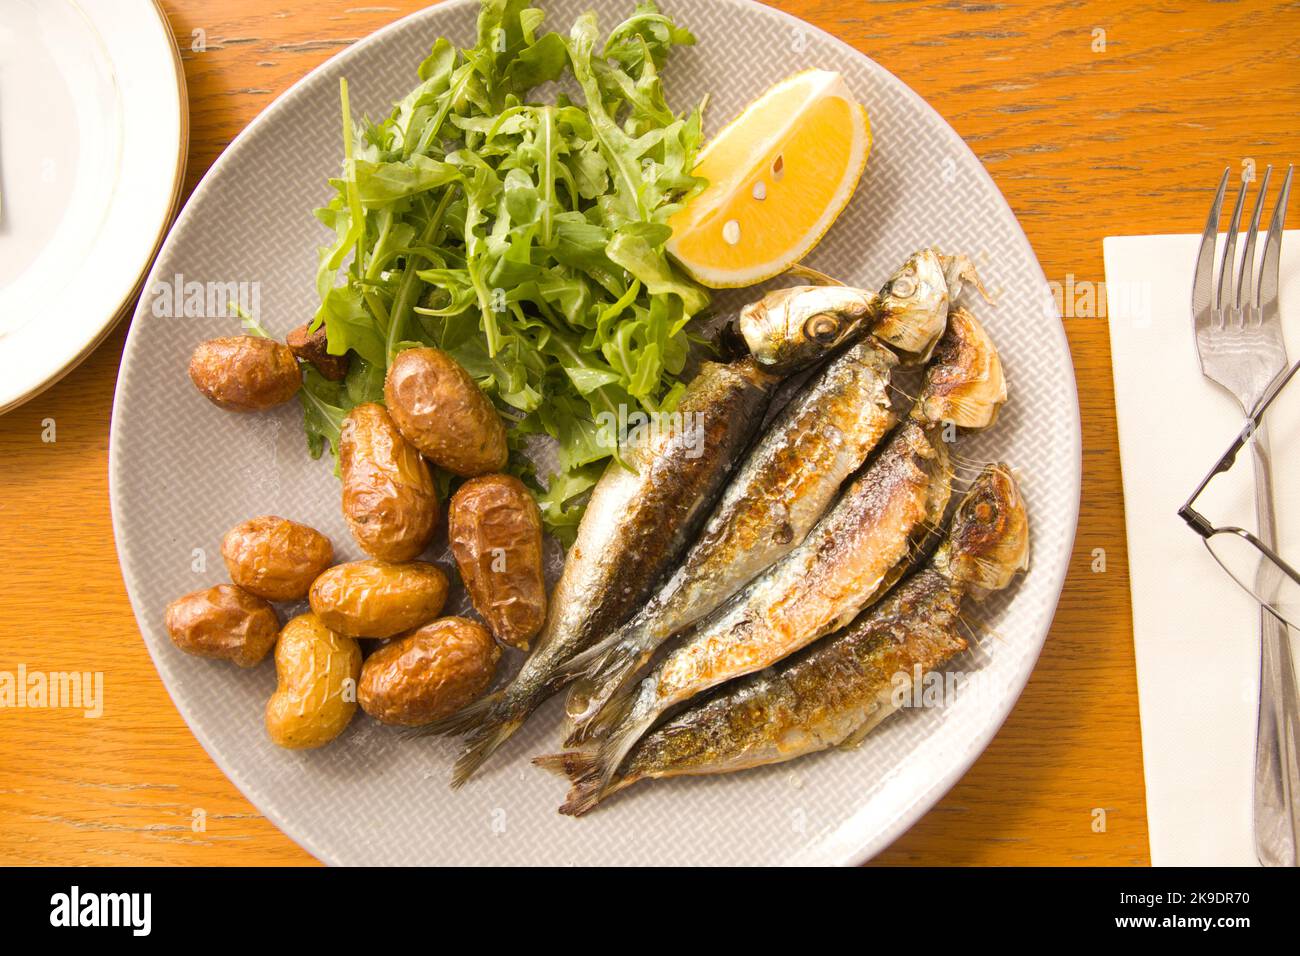 France, Cote d'Azur, Nice, grilled sardines, Stock Photo